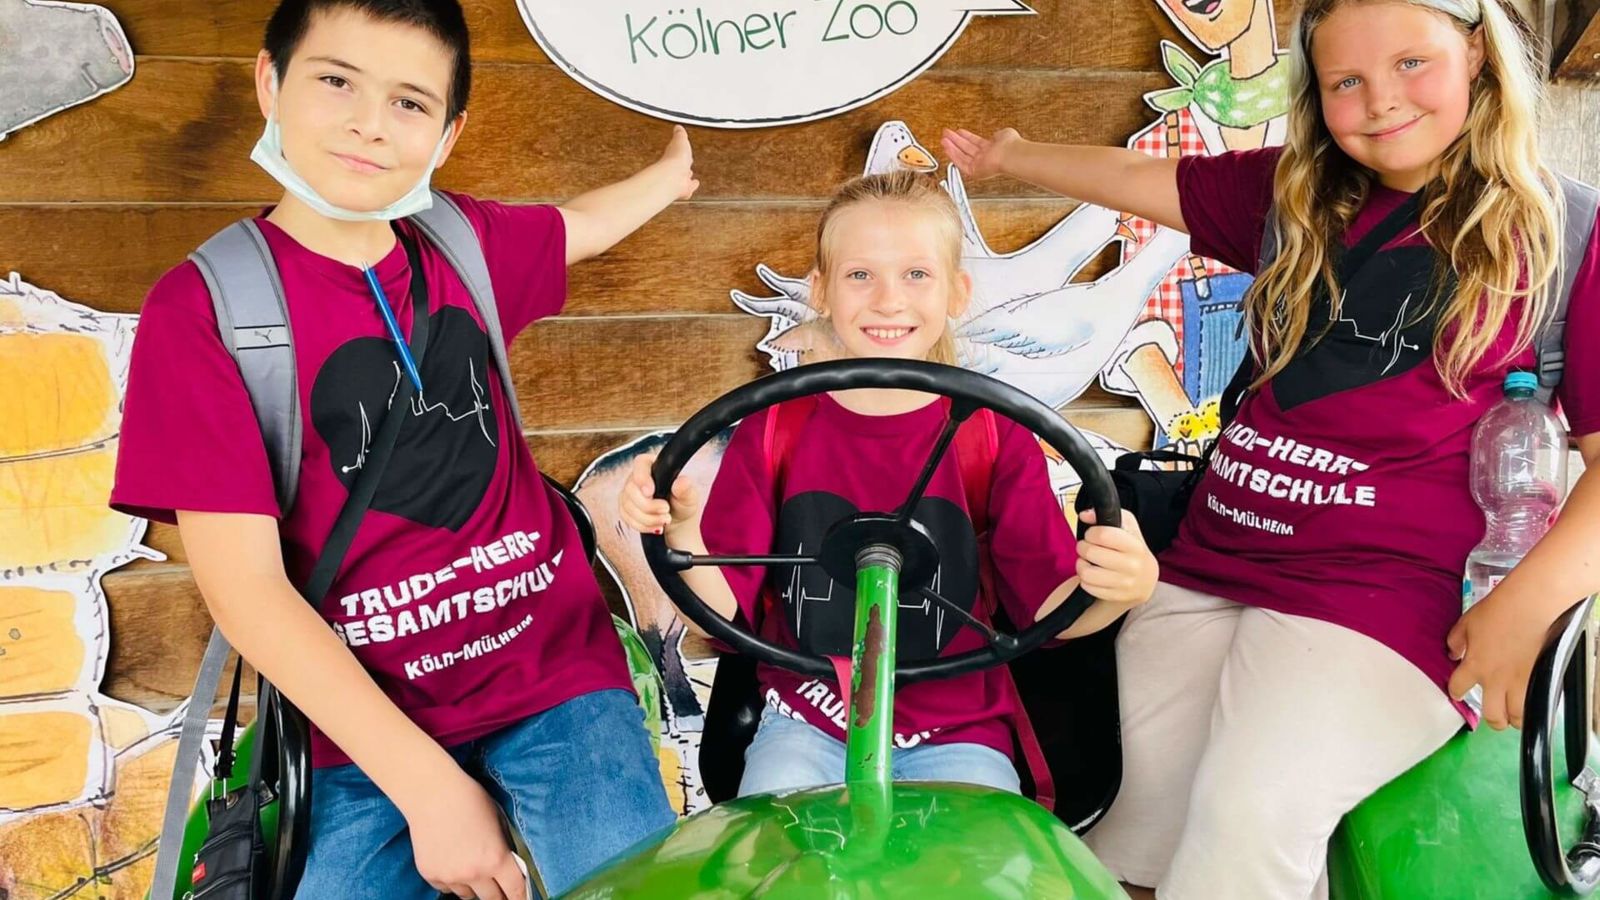 5er im Zoo 2022 - Trude-Herr-Gesamtschule Köln-Mülheim - THG